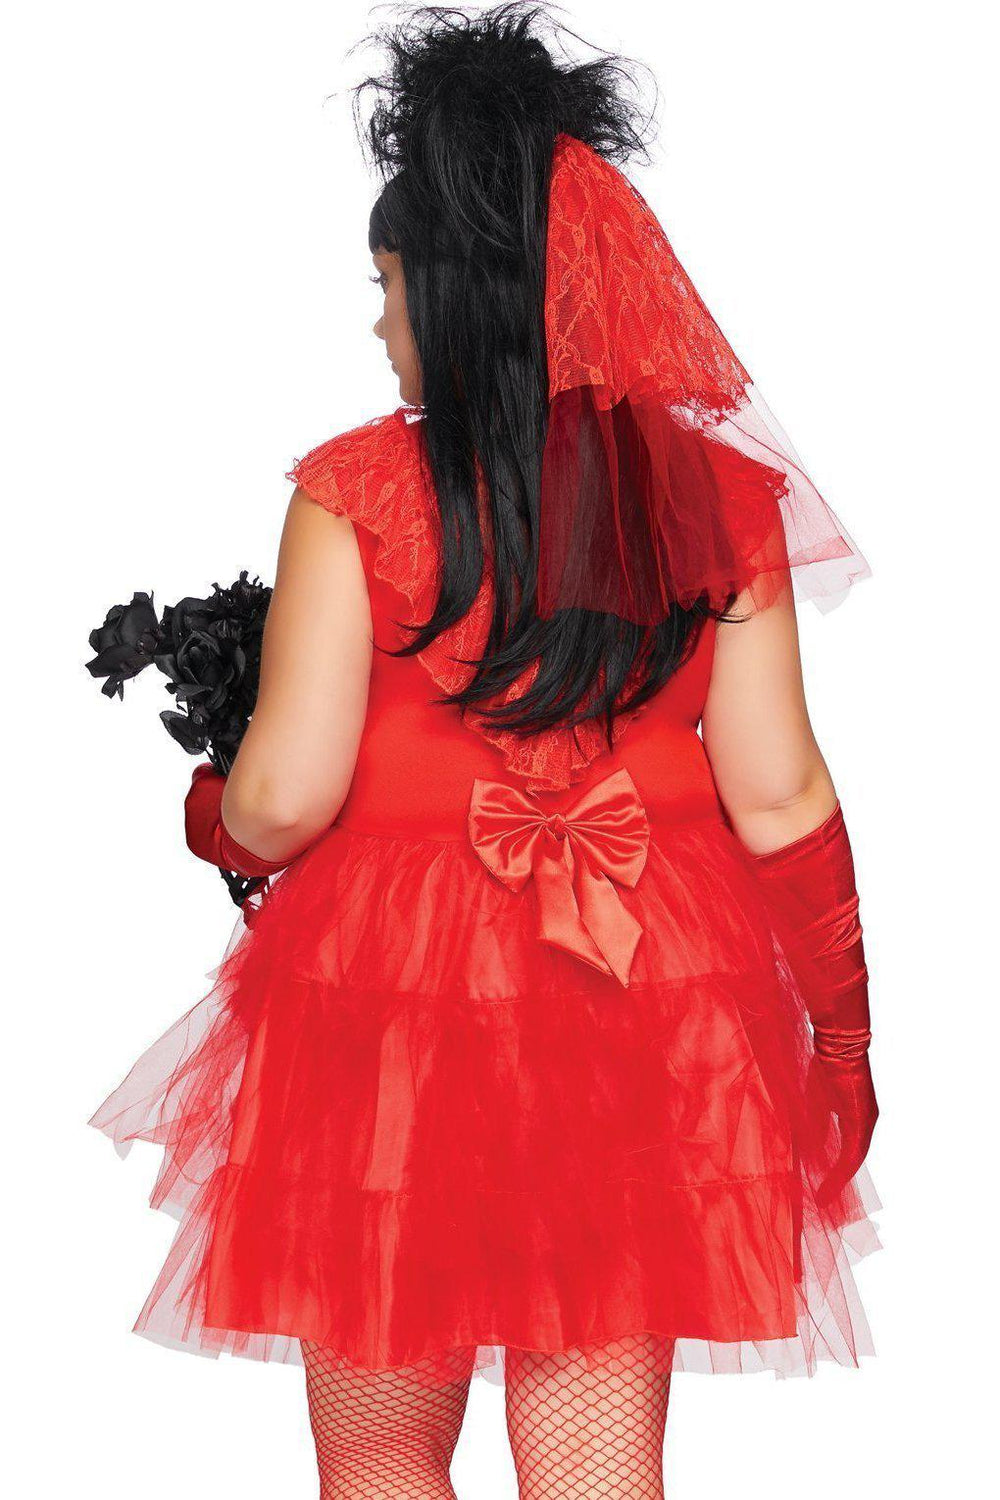 Plus Size Beetle Bride Costume-Other Costumes-Leg Avenue-SEXYSHOES.COM